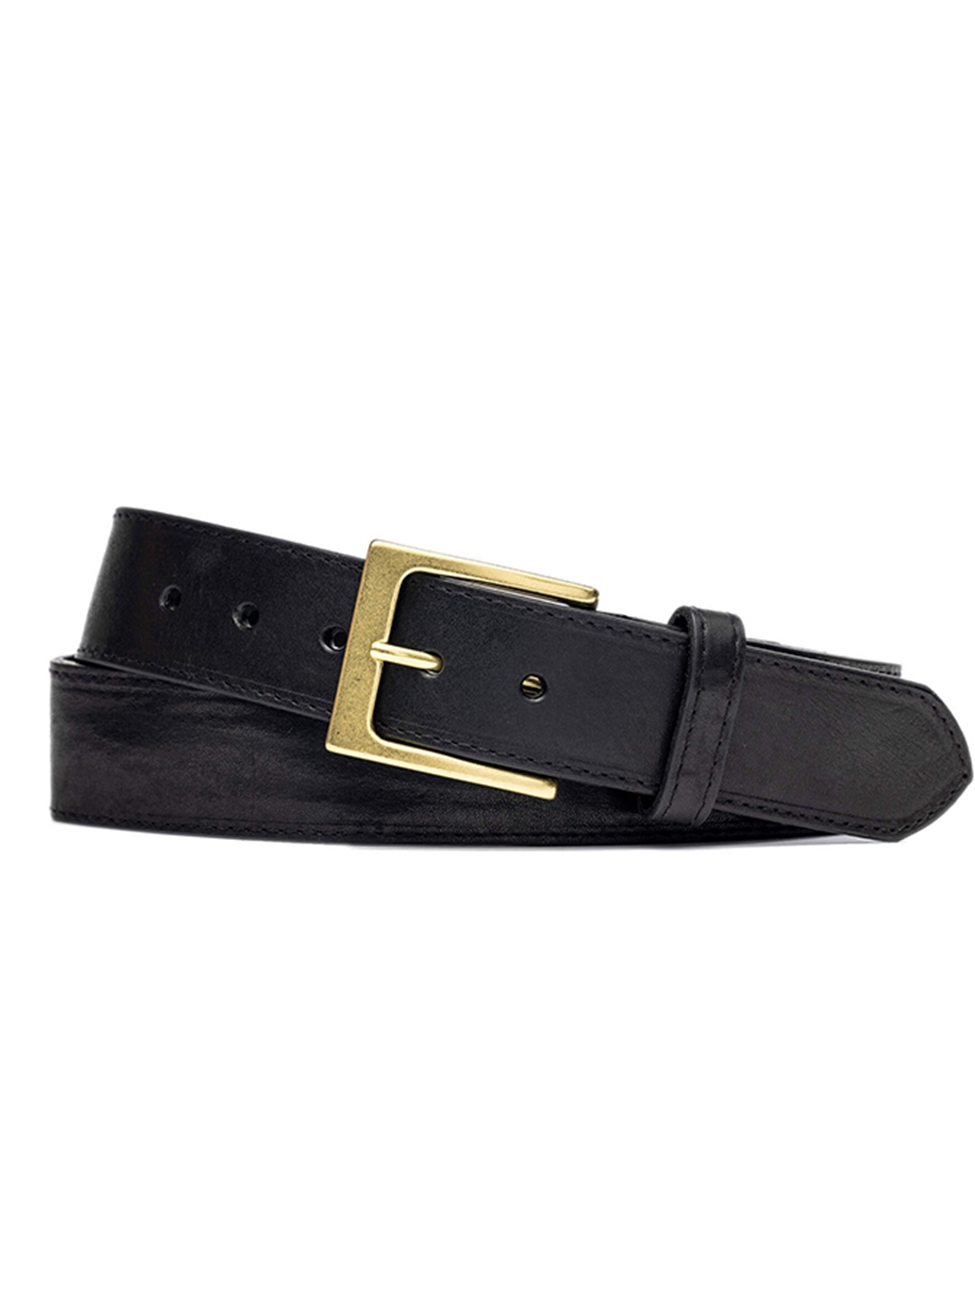 Black Vintage Leather With Natural Brass Buckle Belt, W.Kleinberg Calf Leather  Belts